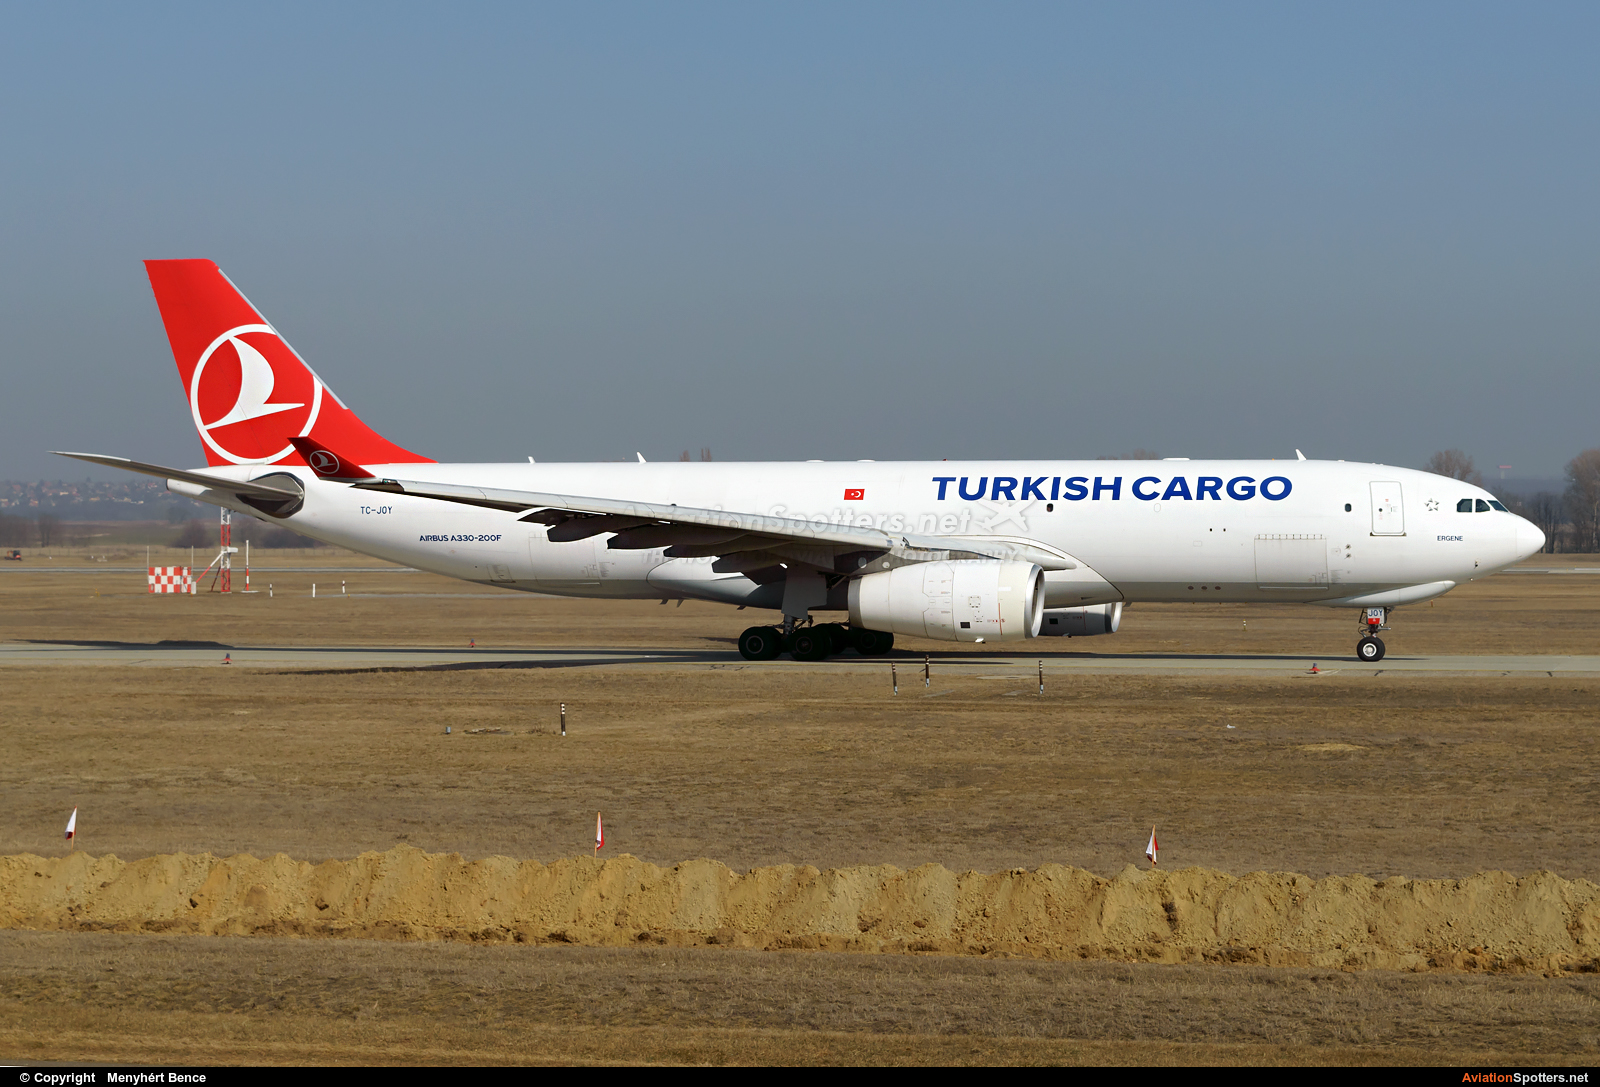 Turkish Airlines Cargo  -  A330-200F  (TC-JOY) By Menyhért Bence (hadesdras91)